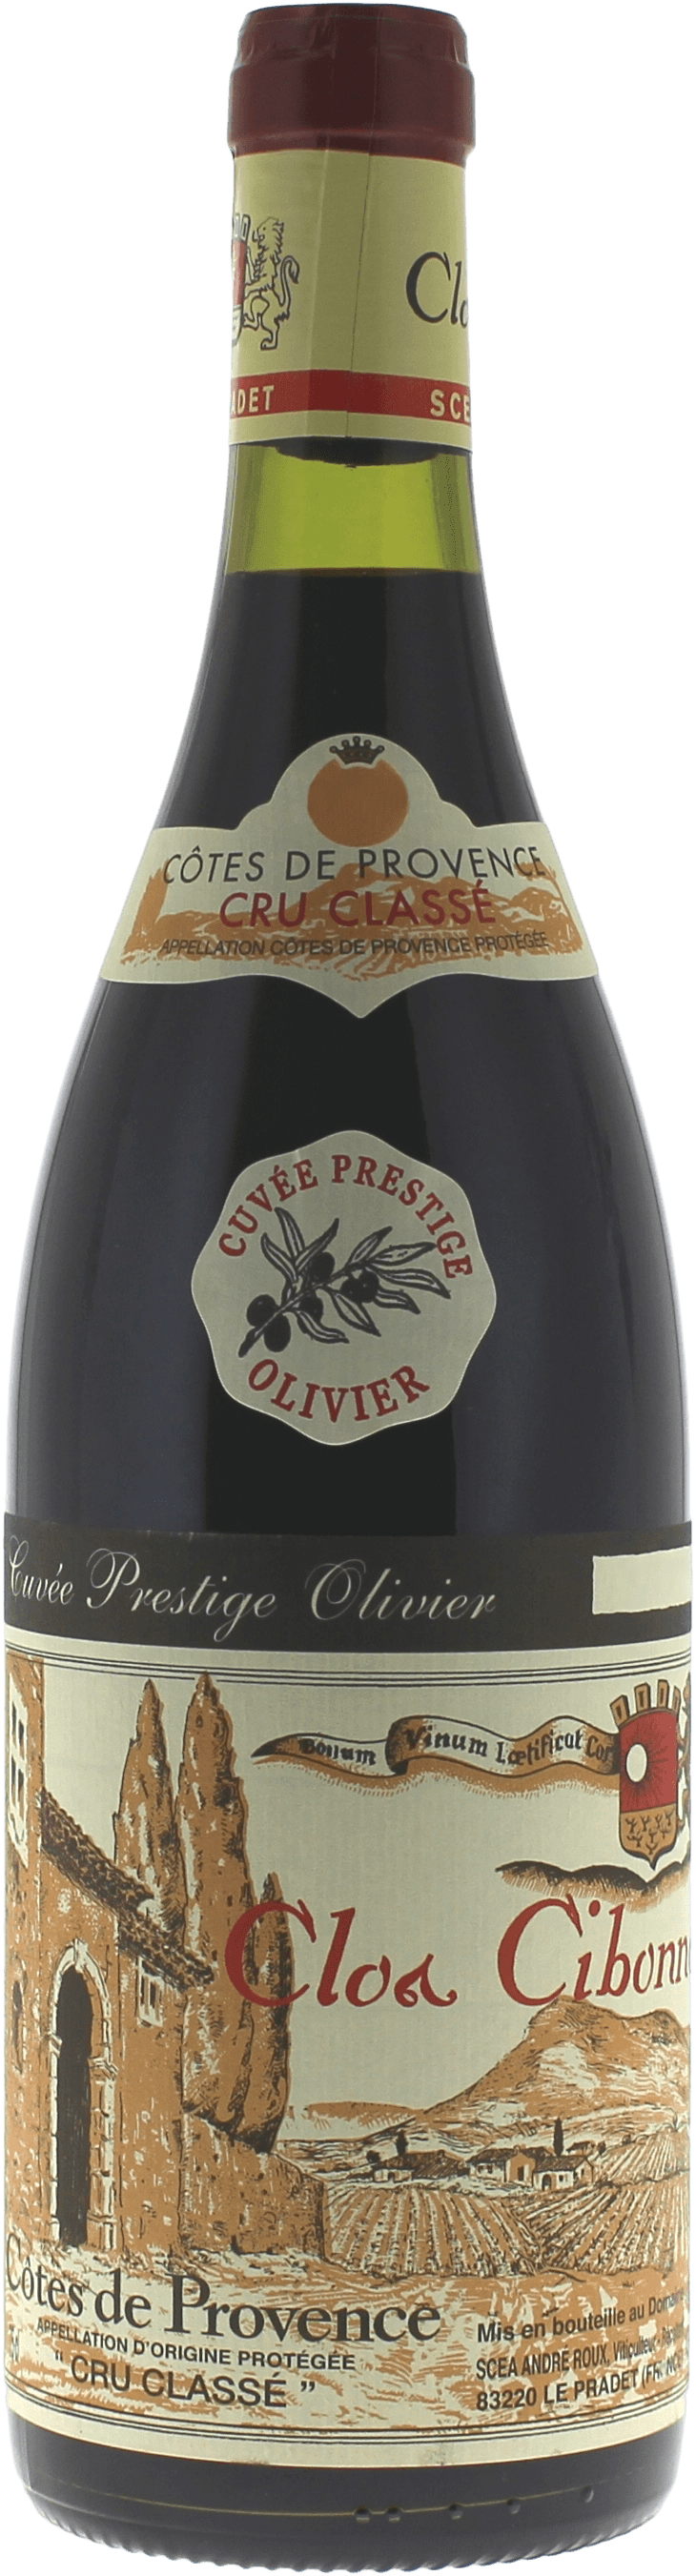 Clos cibonne prestige olivier 2017  Cotes de Provence AOP, Provence